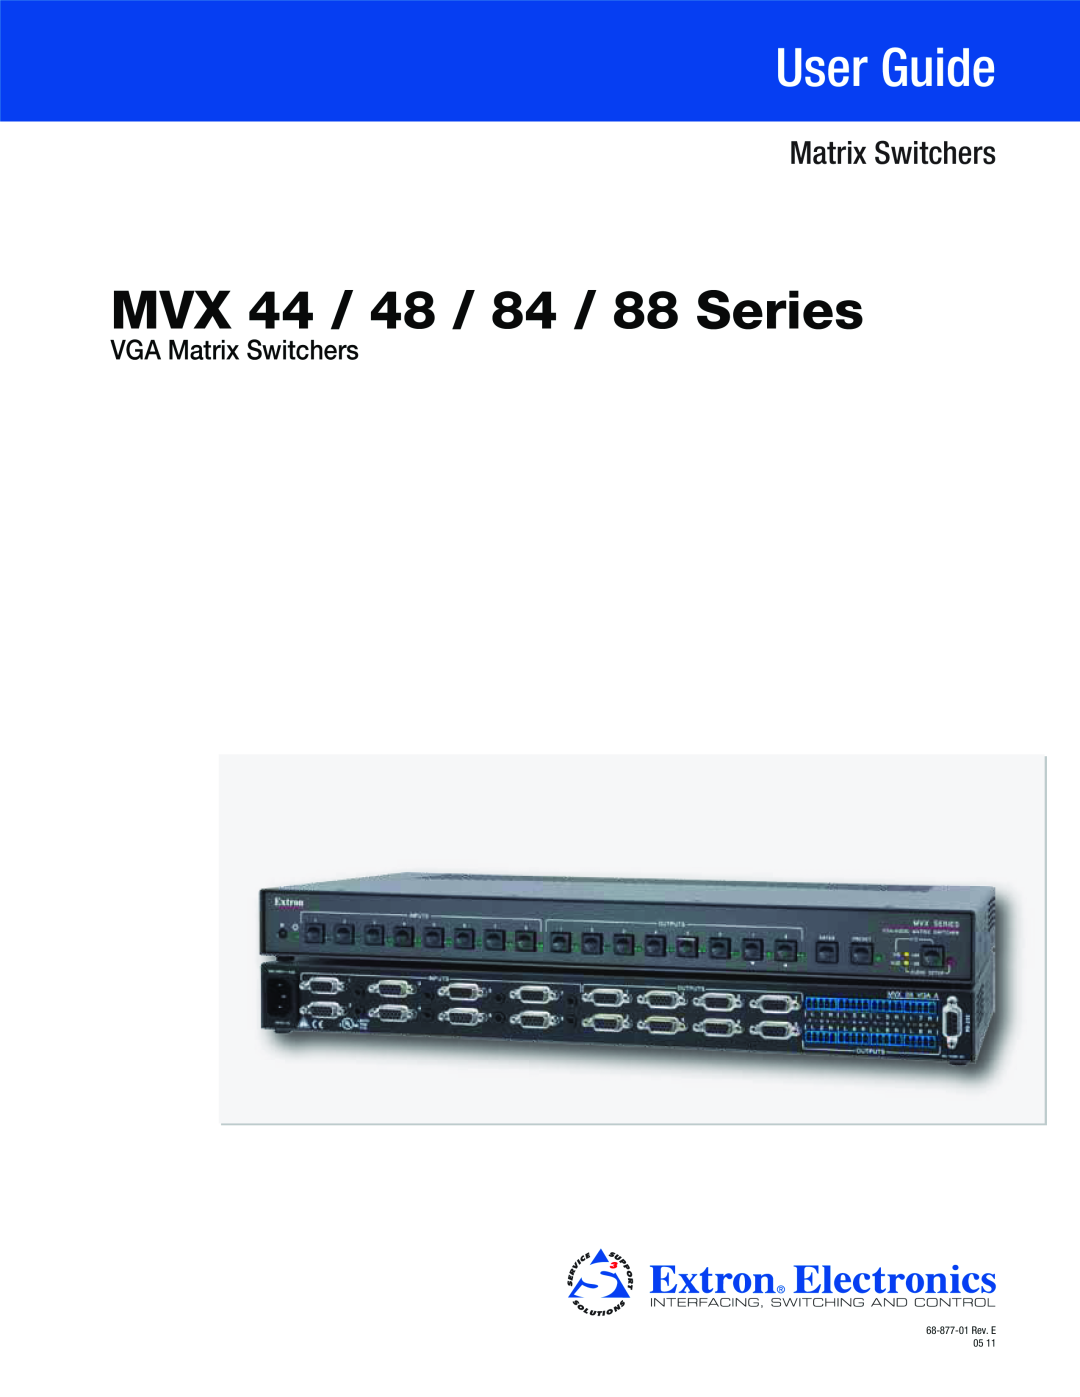 Extron electronic MVX 88 manual User Guide, MVX 44 / 48 / 84 / 88 Series, VGA Matrix Switchers, 68-877-01 Rev. E 